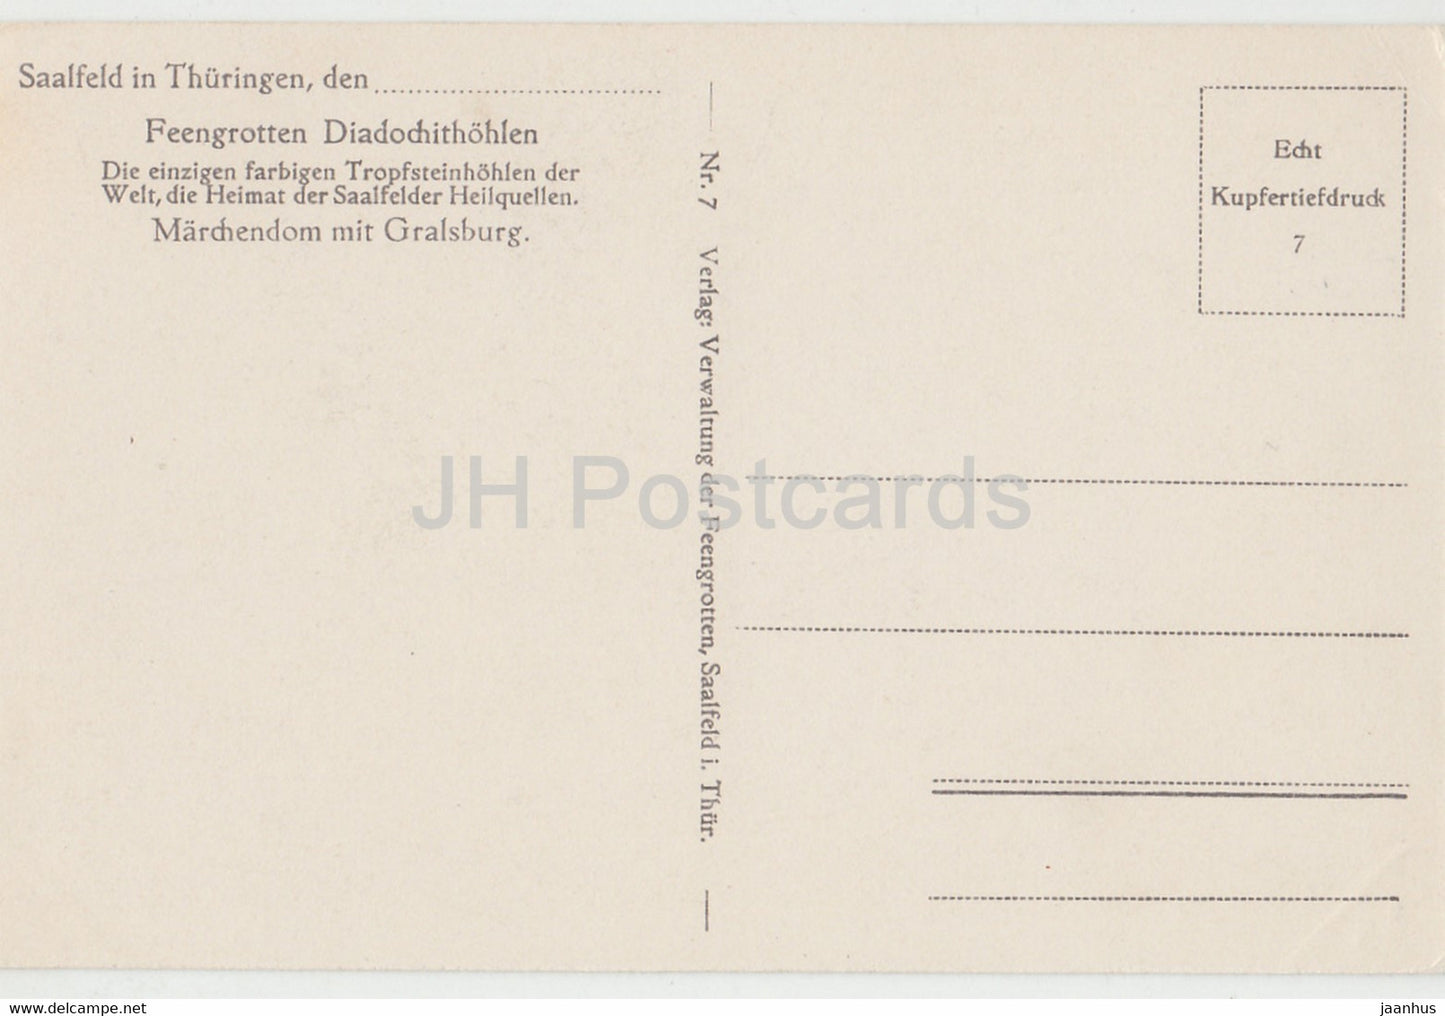 Saalfeld in Thuringen - Feengrotten - Marchendom mit Gralsburg - cave - 7 - old postcard - Germany - unused